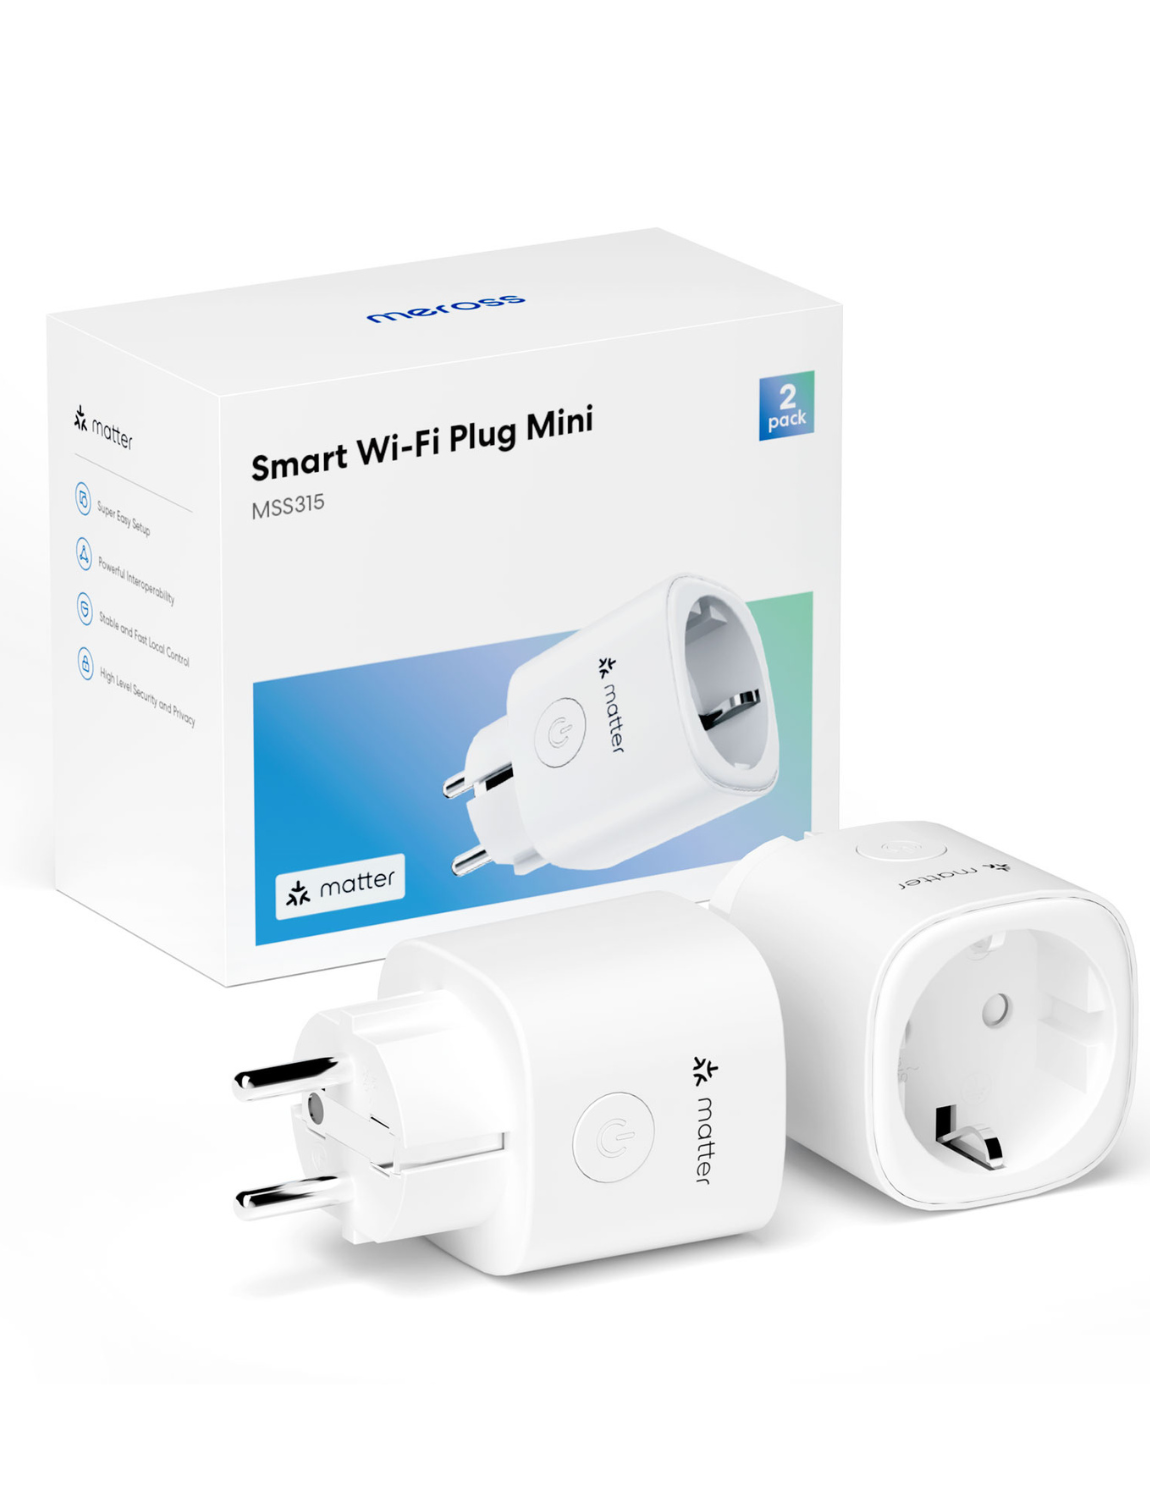 Smart Power Plugs Meross HomeKit WiFi Smart Plug UK Socket Outlet Timer  Schedule Wireless Voice Control Support Alexa Google Assistant SmartThings  HKD230727 From Memory_angell, $34.48